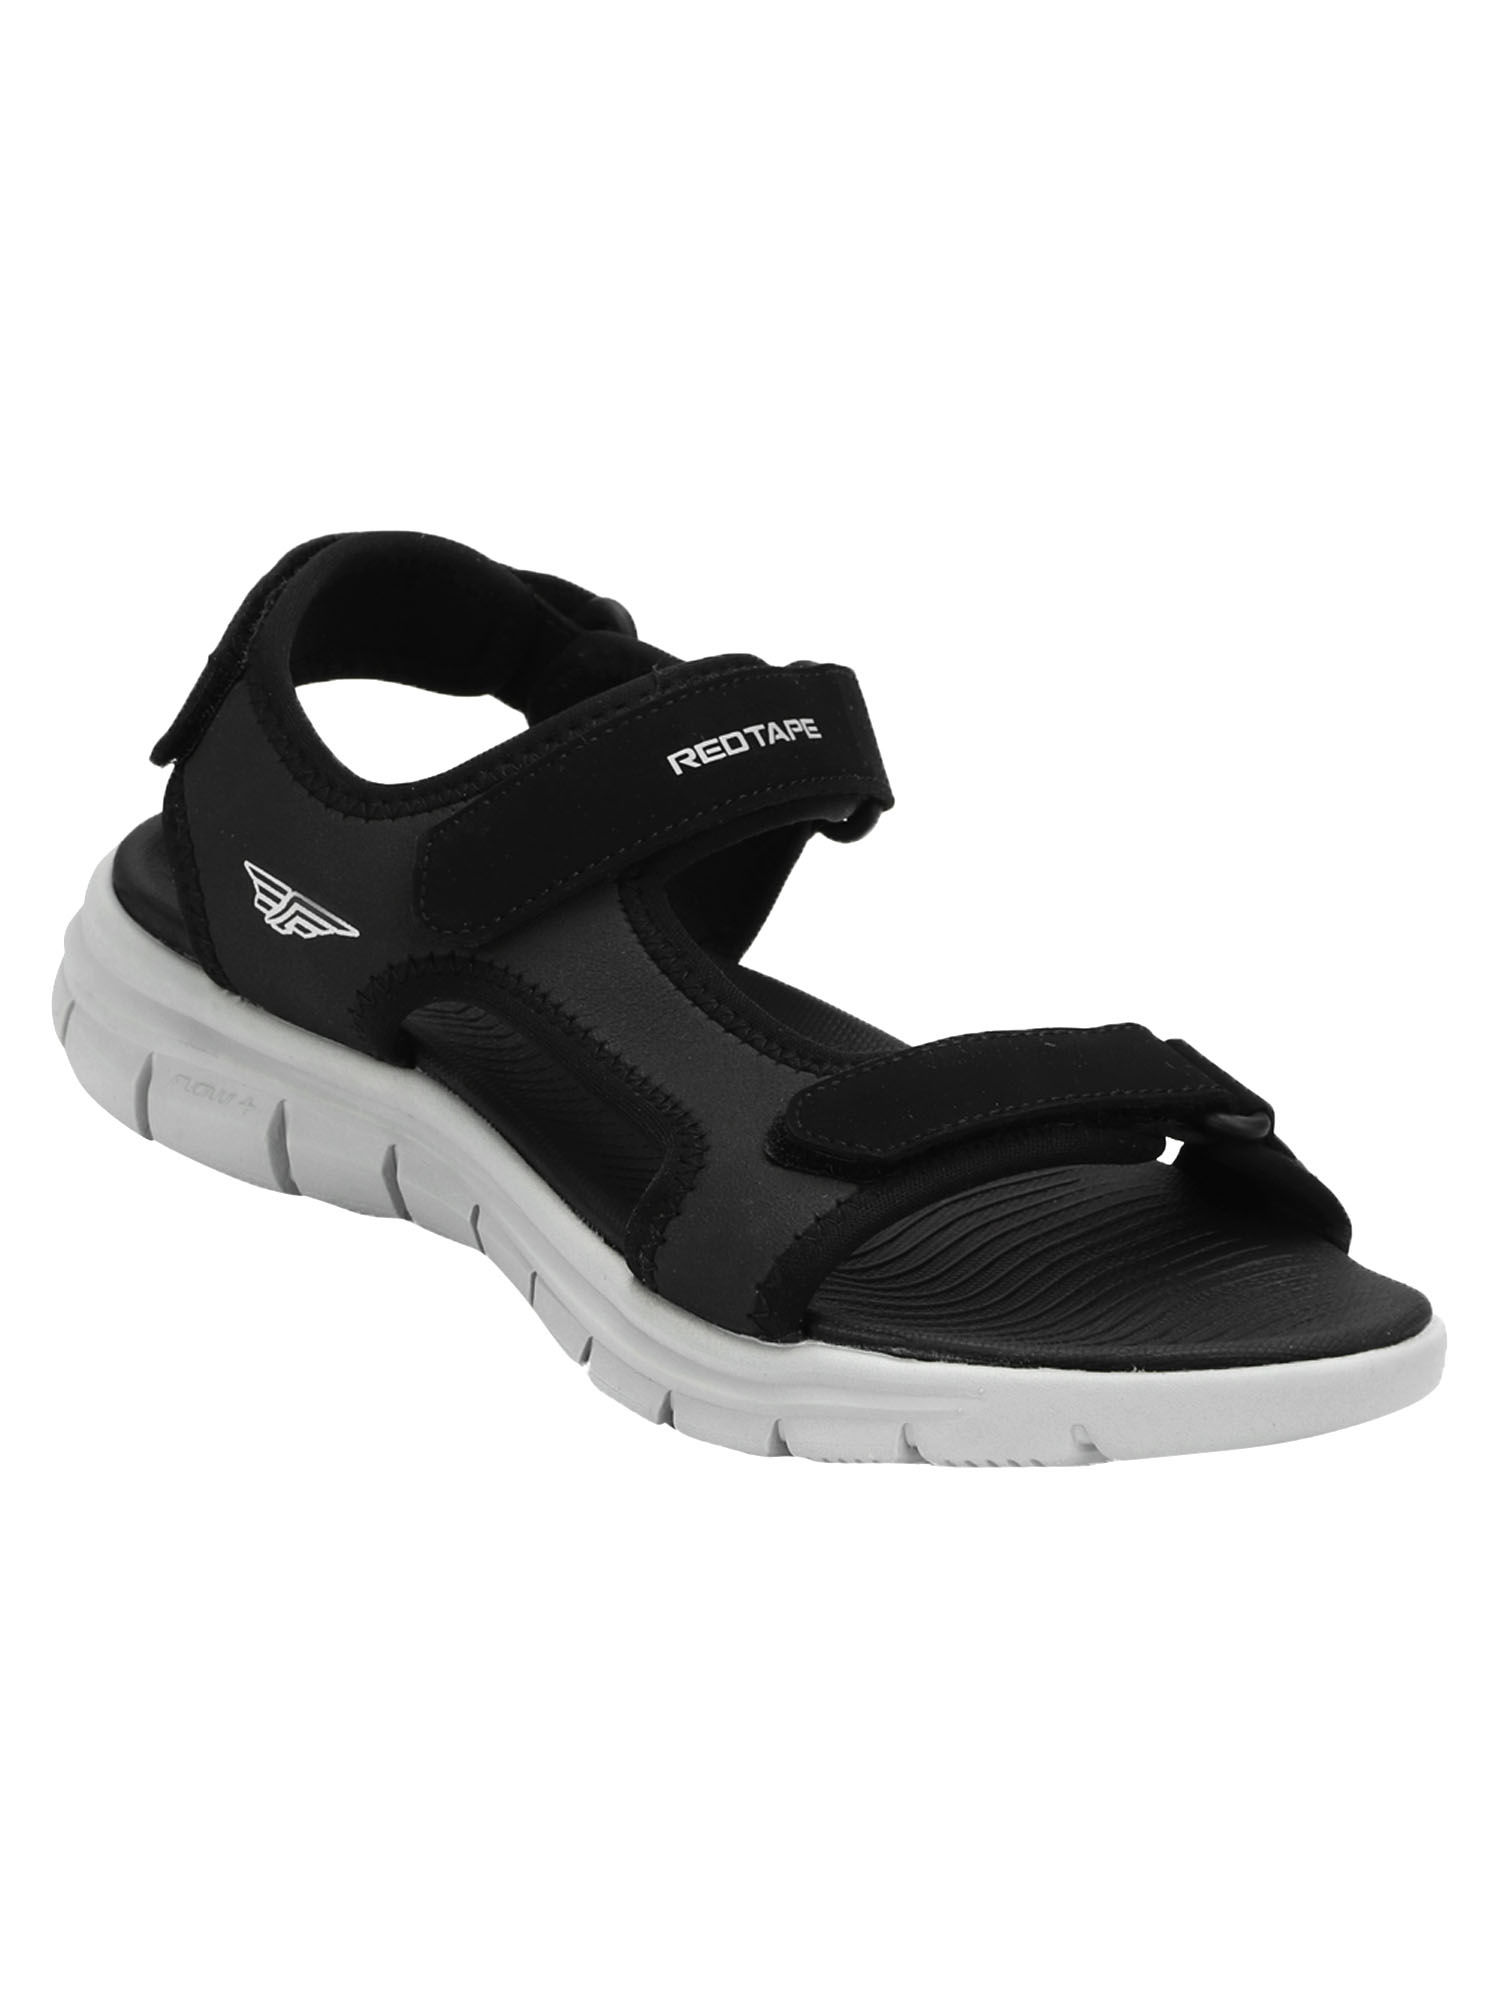 Red Tape Sports Sandals for Men  Comfortable SlipResistant6  Amazonin  Fashion